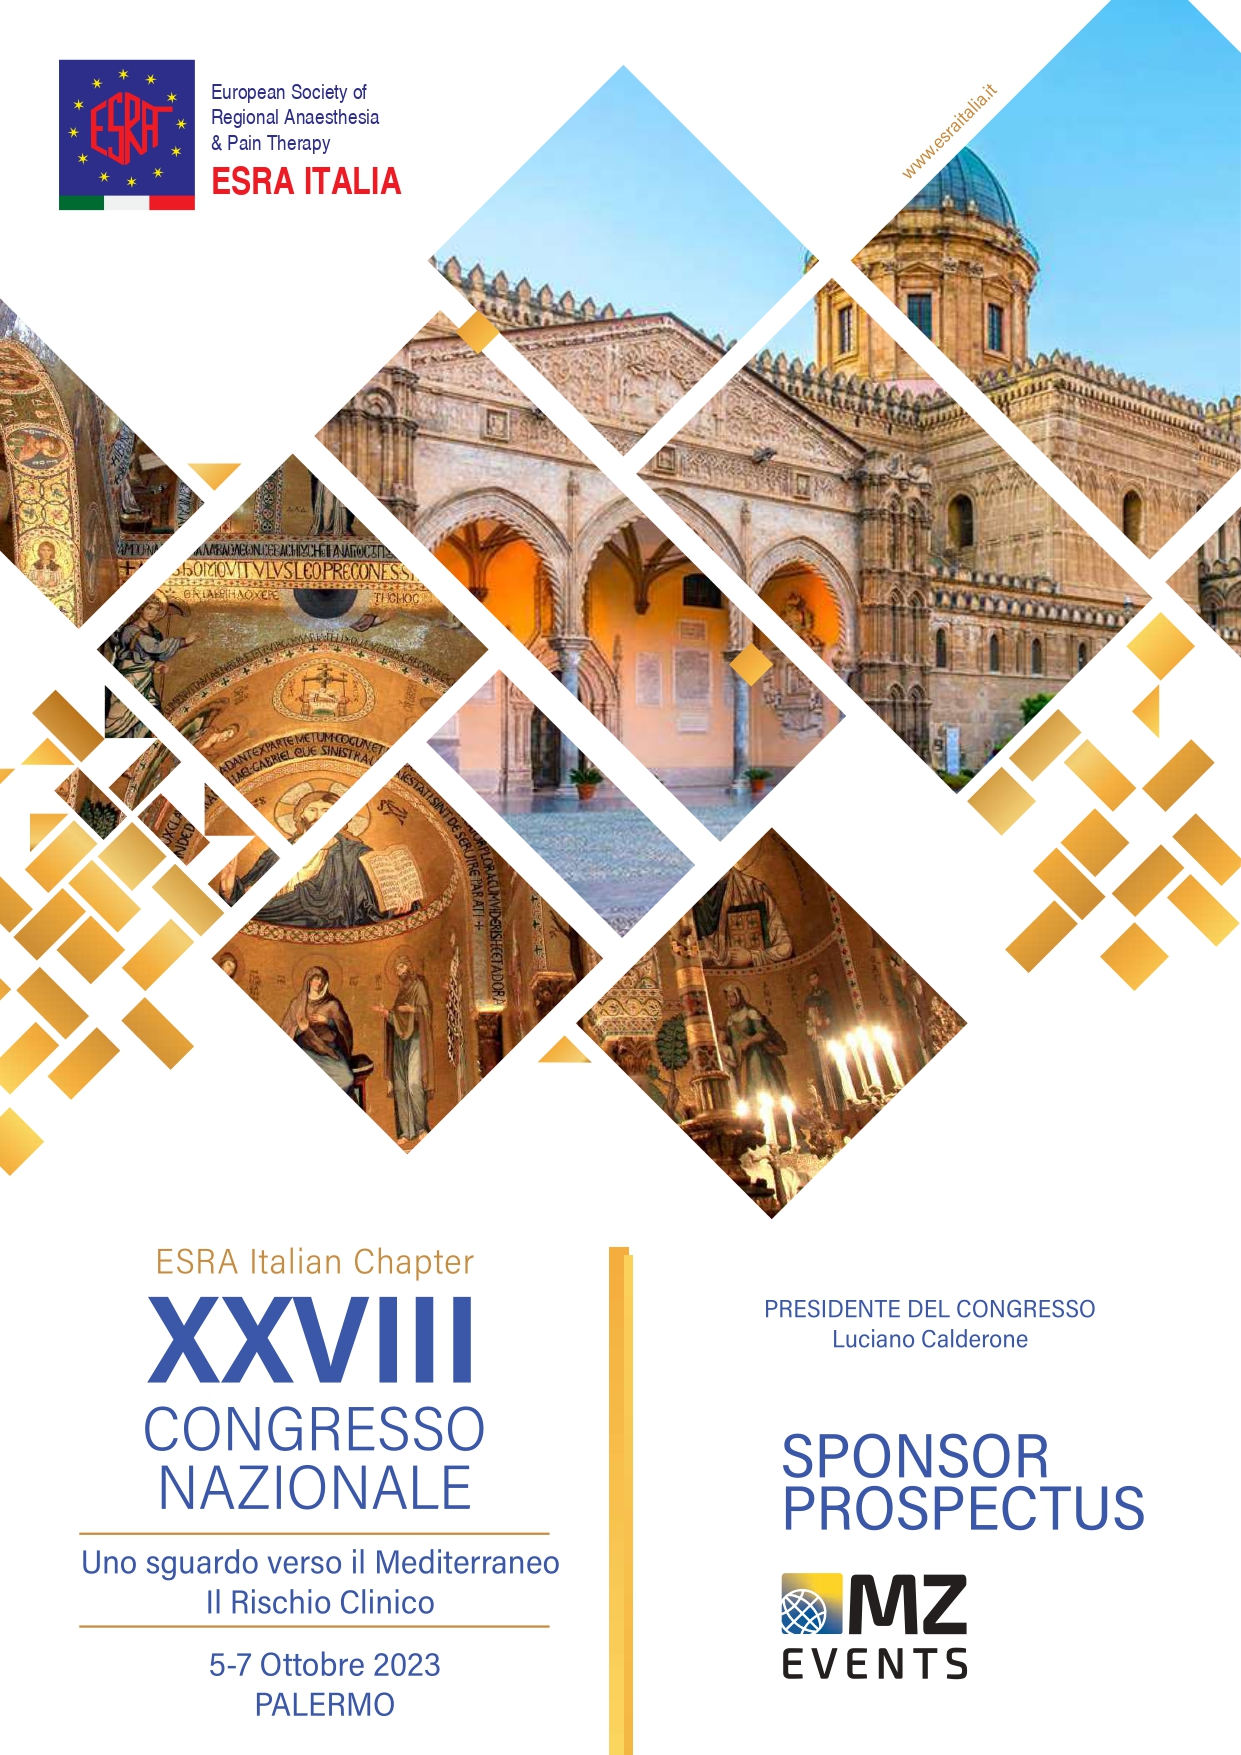 XXVIII Congresso Nazionale ESRA Italian Chapter